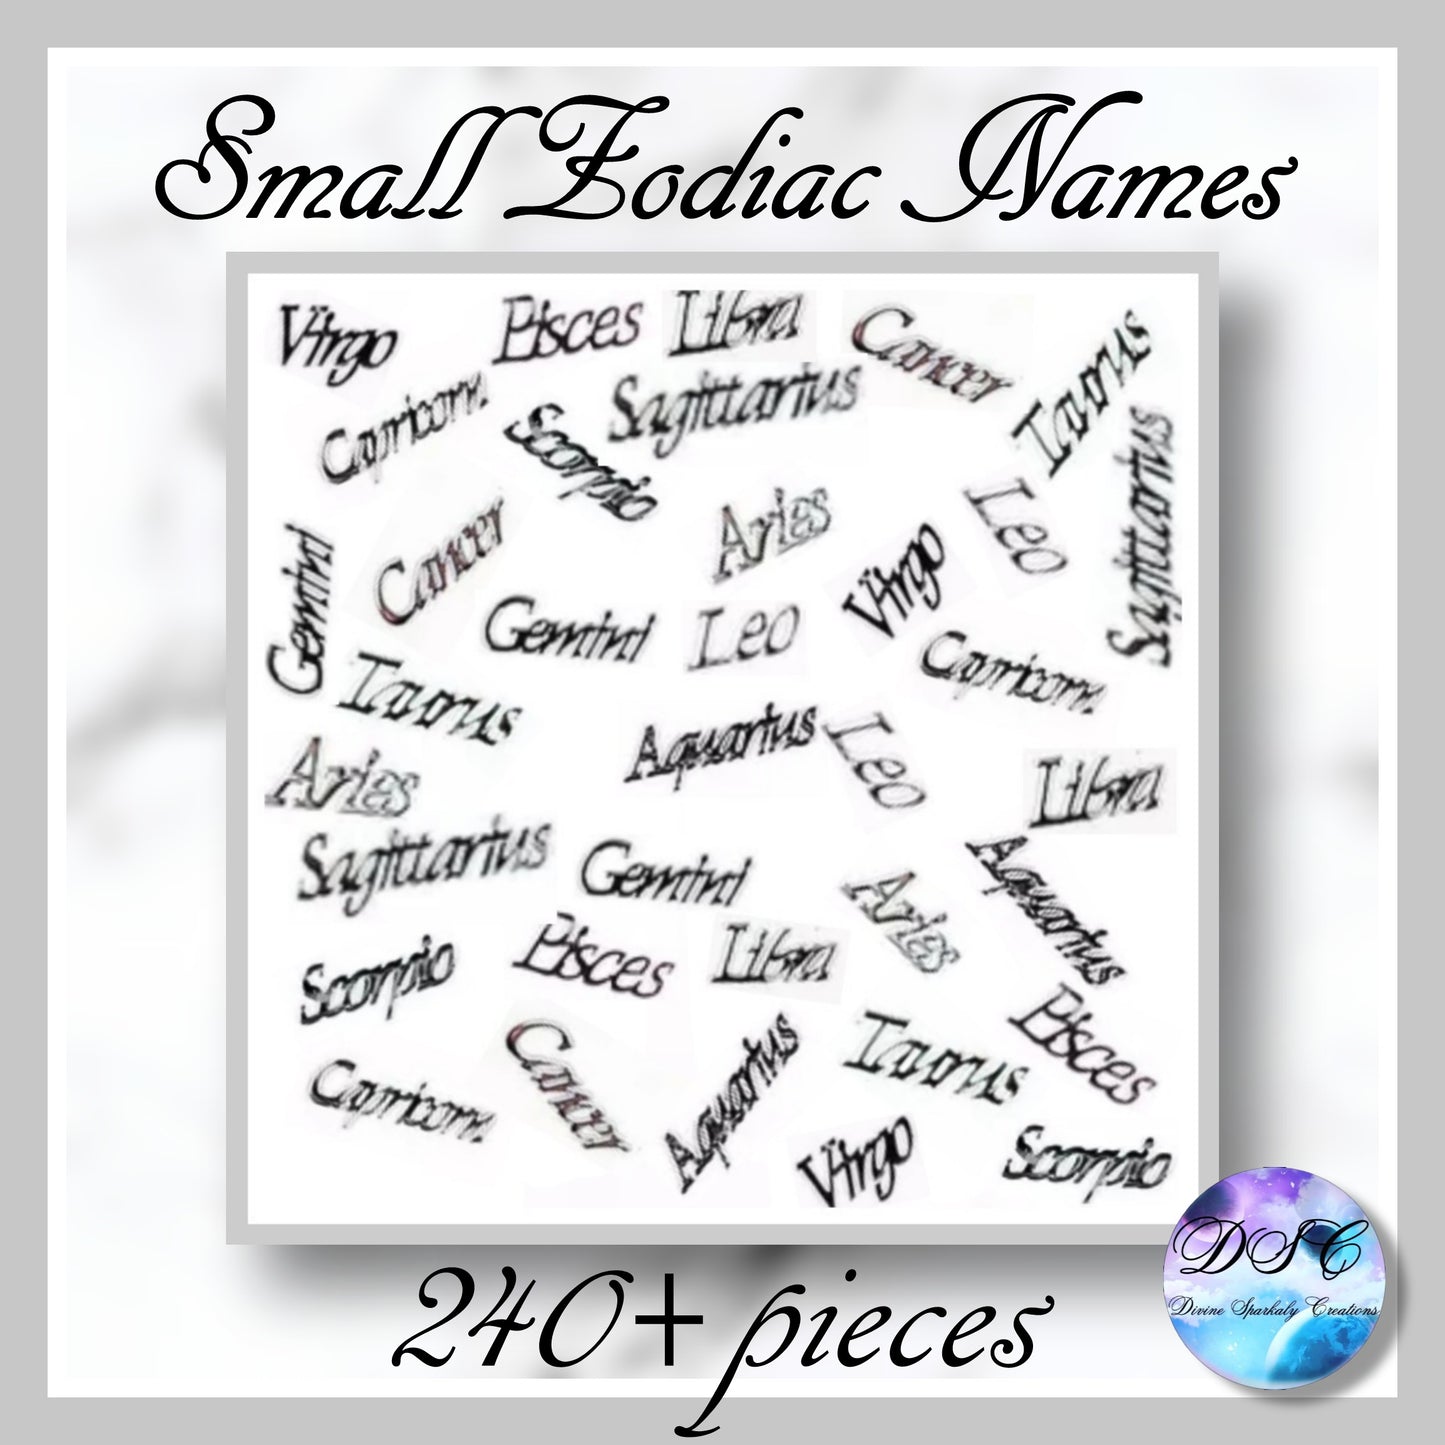 Small Zodiac Names